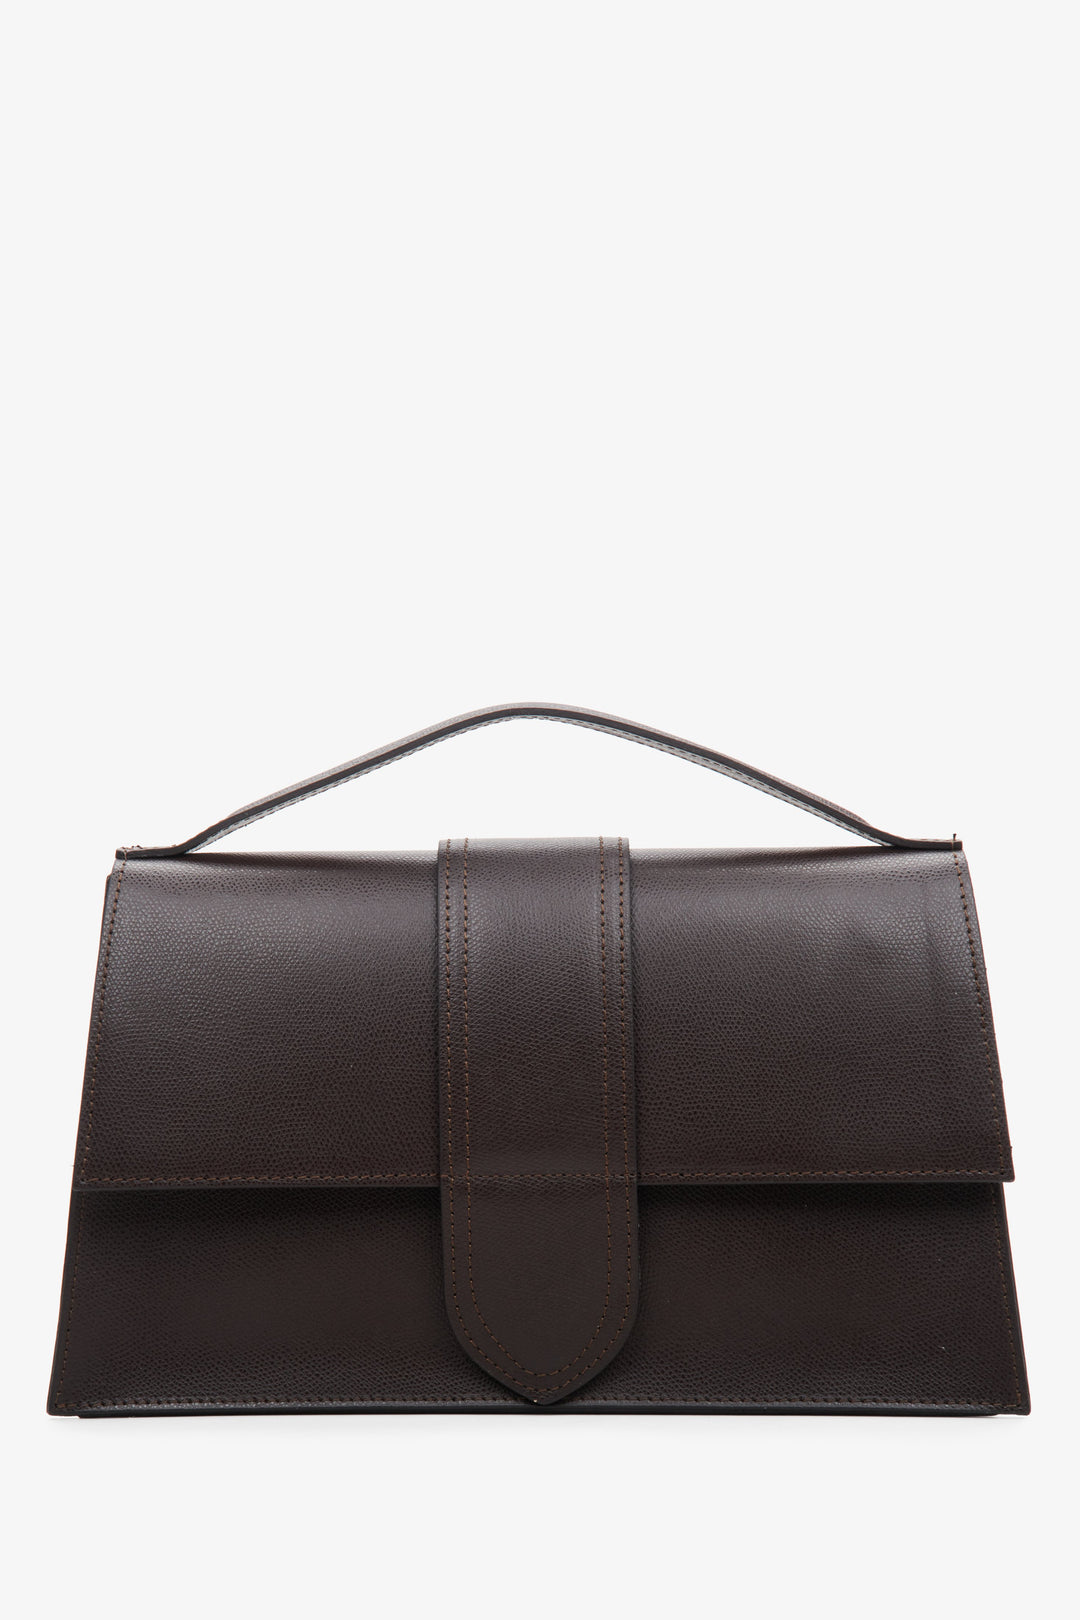 Women's Small Dark Brown Flap Handbag made of Italian Genuine Leather ER00114074.